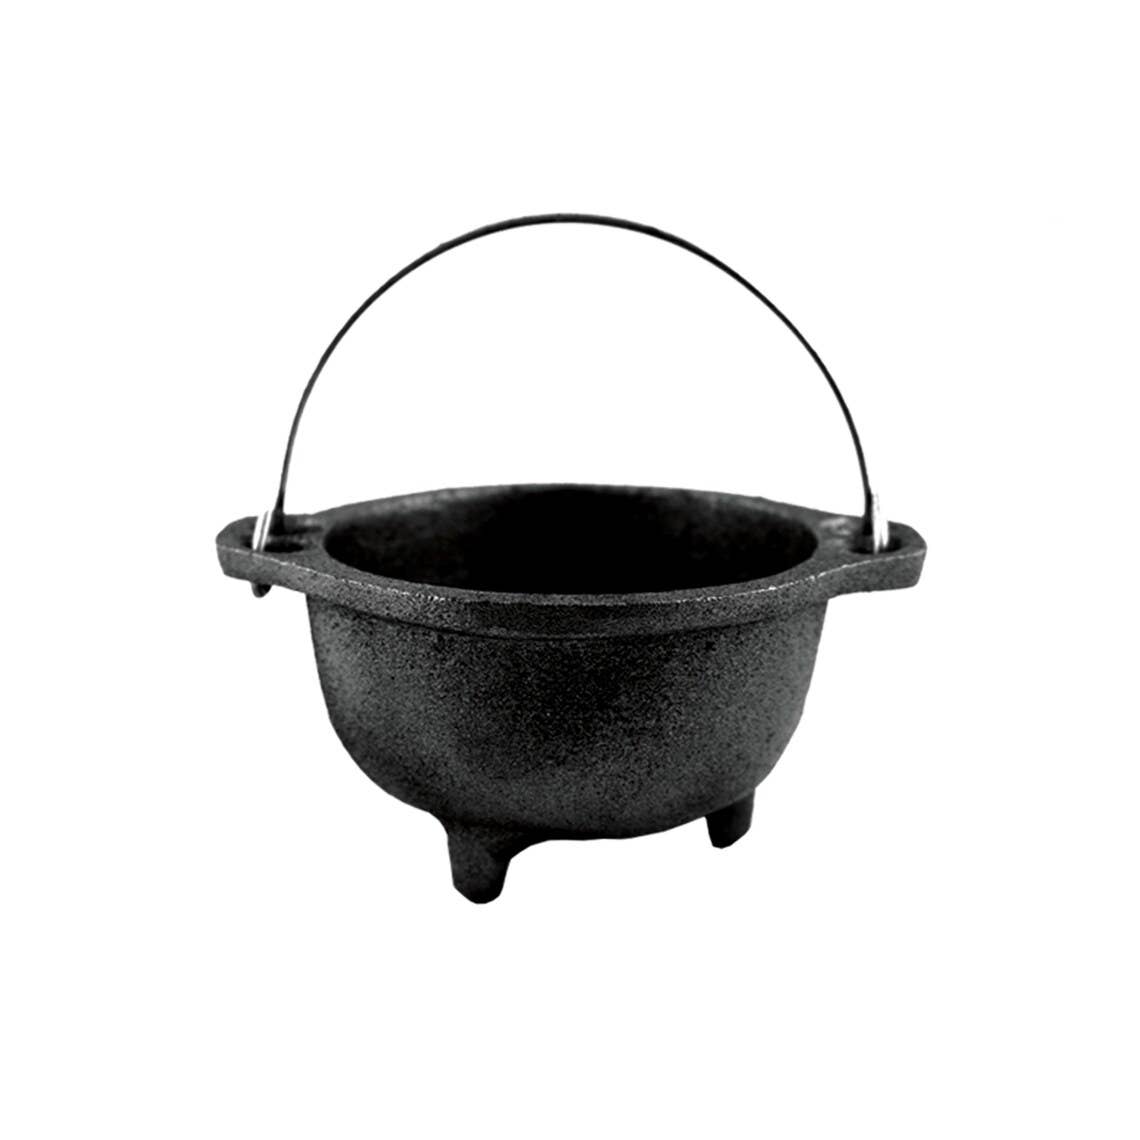 Plain Cast Iron Cauldron Bowl 4 inch with Hanging Holder